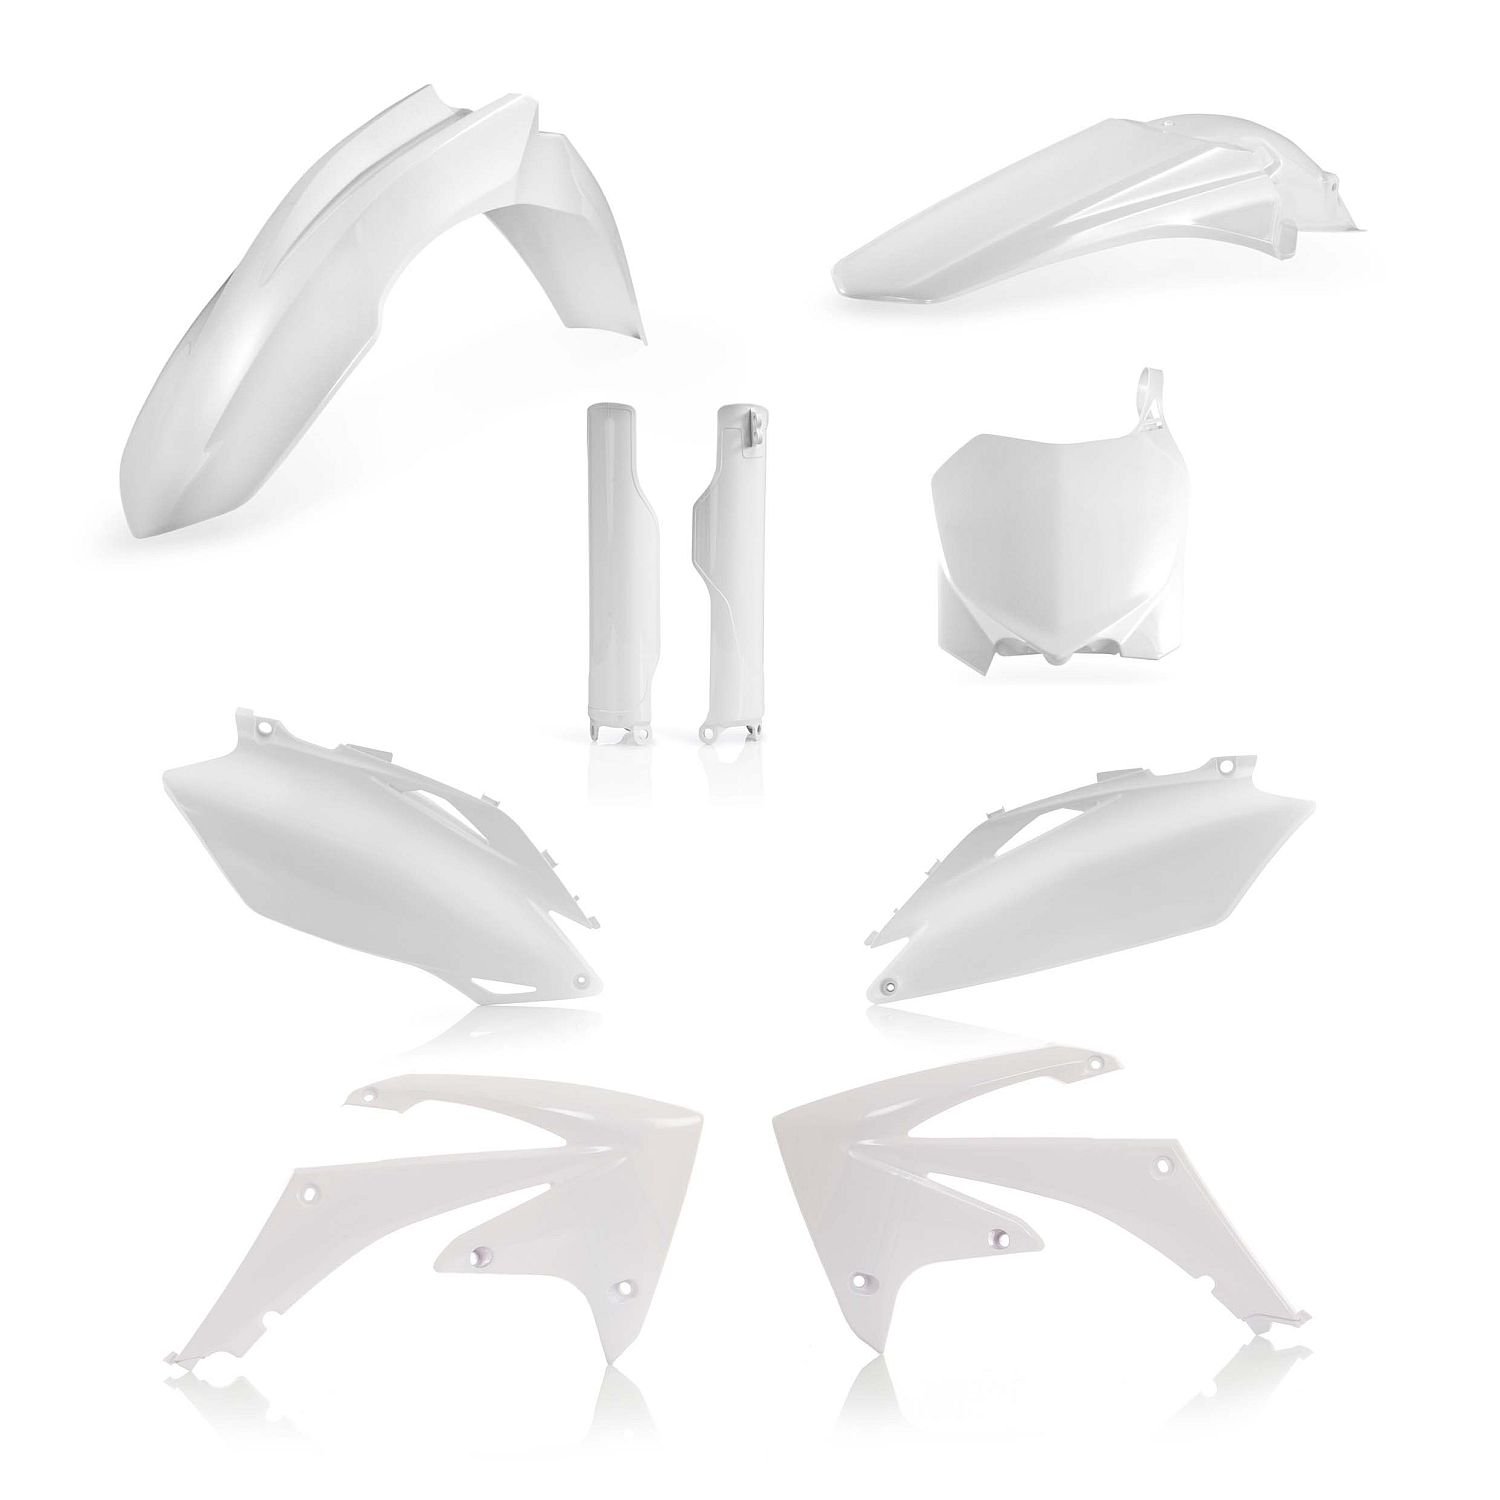 Acerbis Kit Plastiche completo Full-Kit Honda CRF 250 10-13, CRF 450 09-12, Bianco